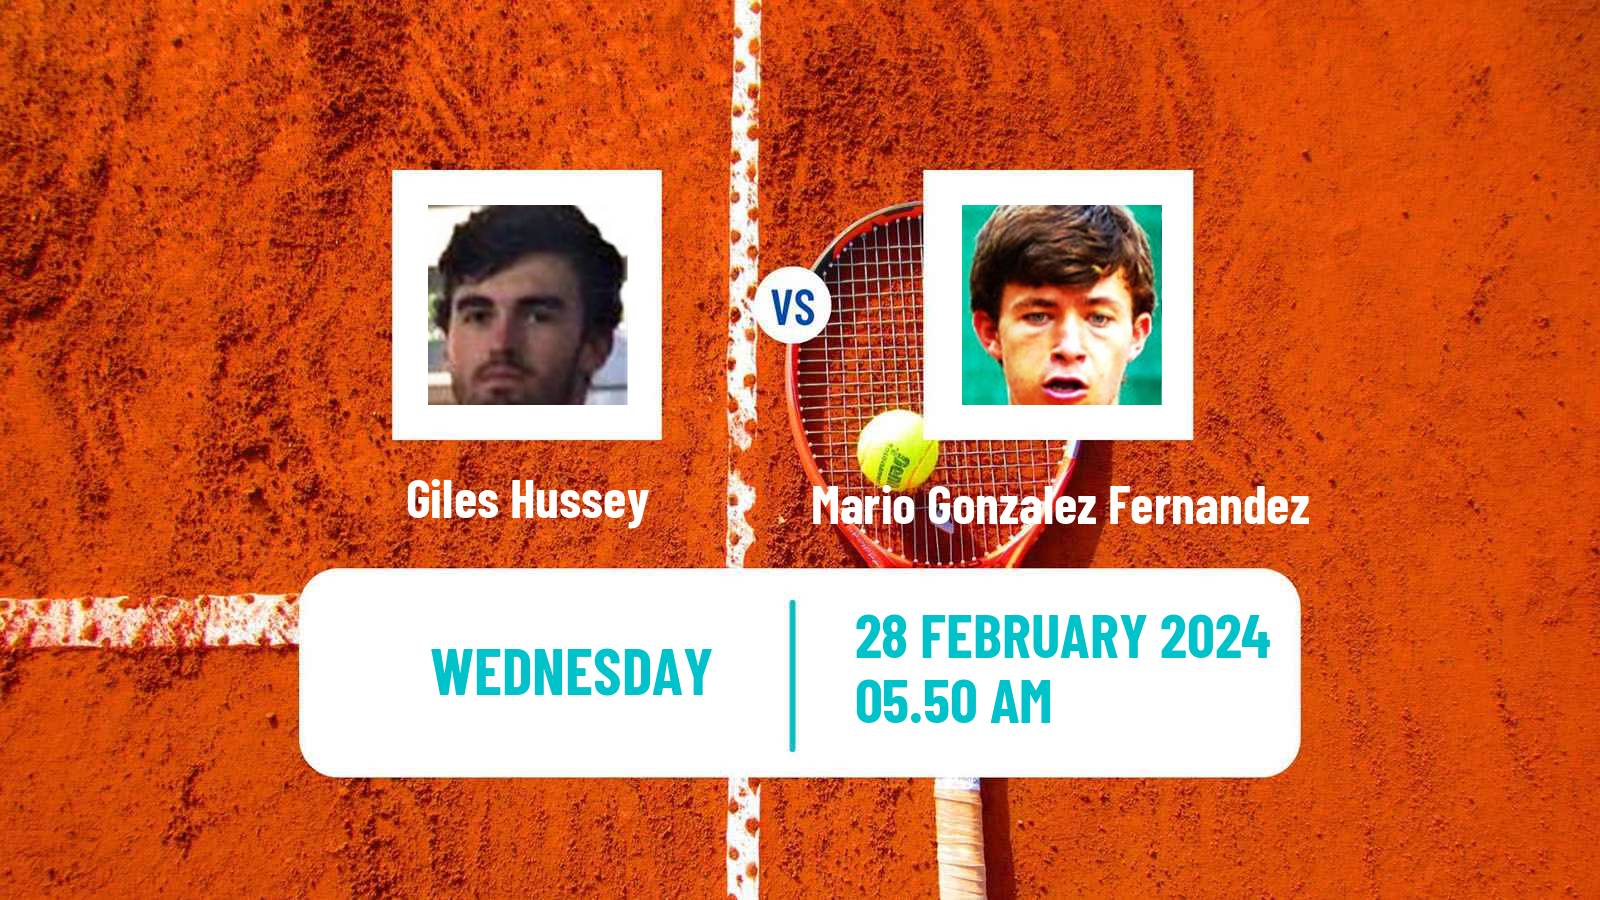 Tennis ITF M15 Villena 2 Men Giles Hussey - Mario Gonzalez Fernandez